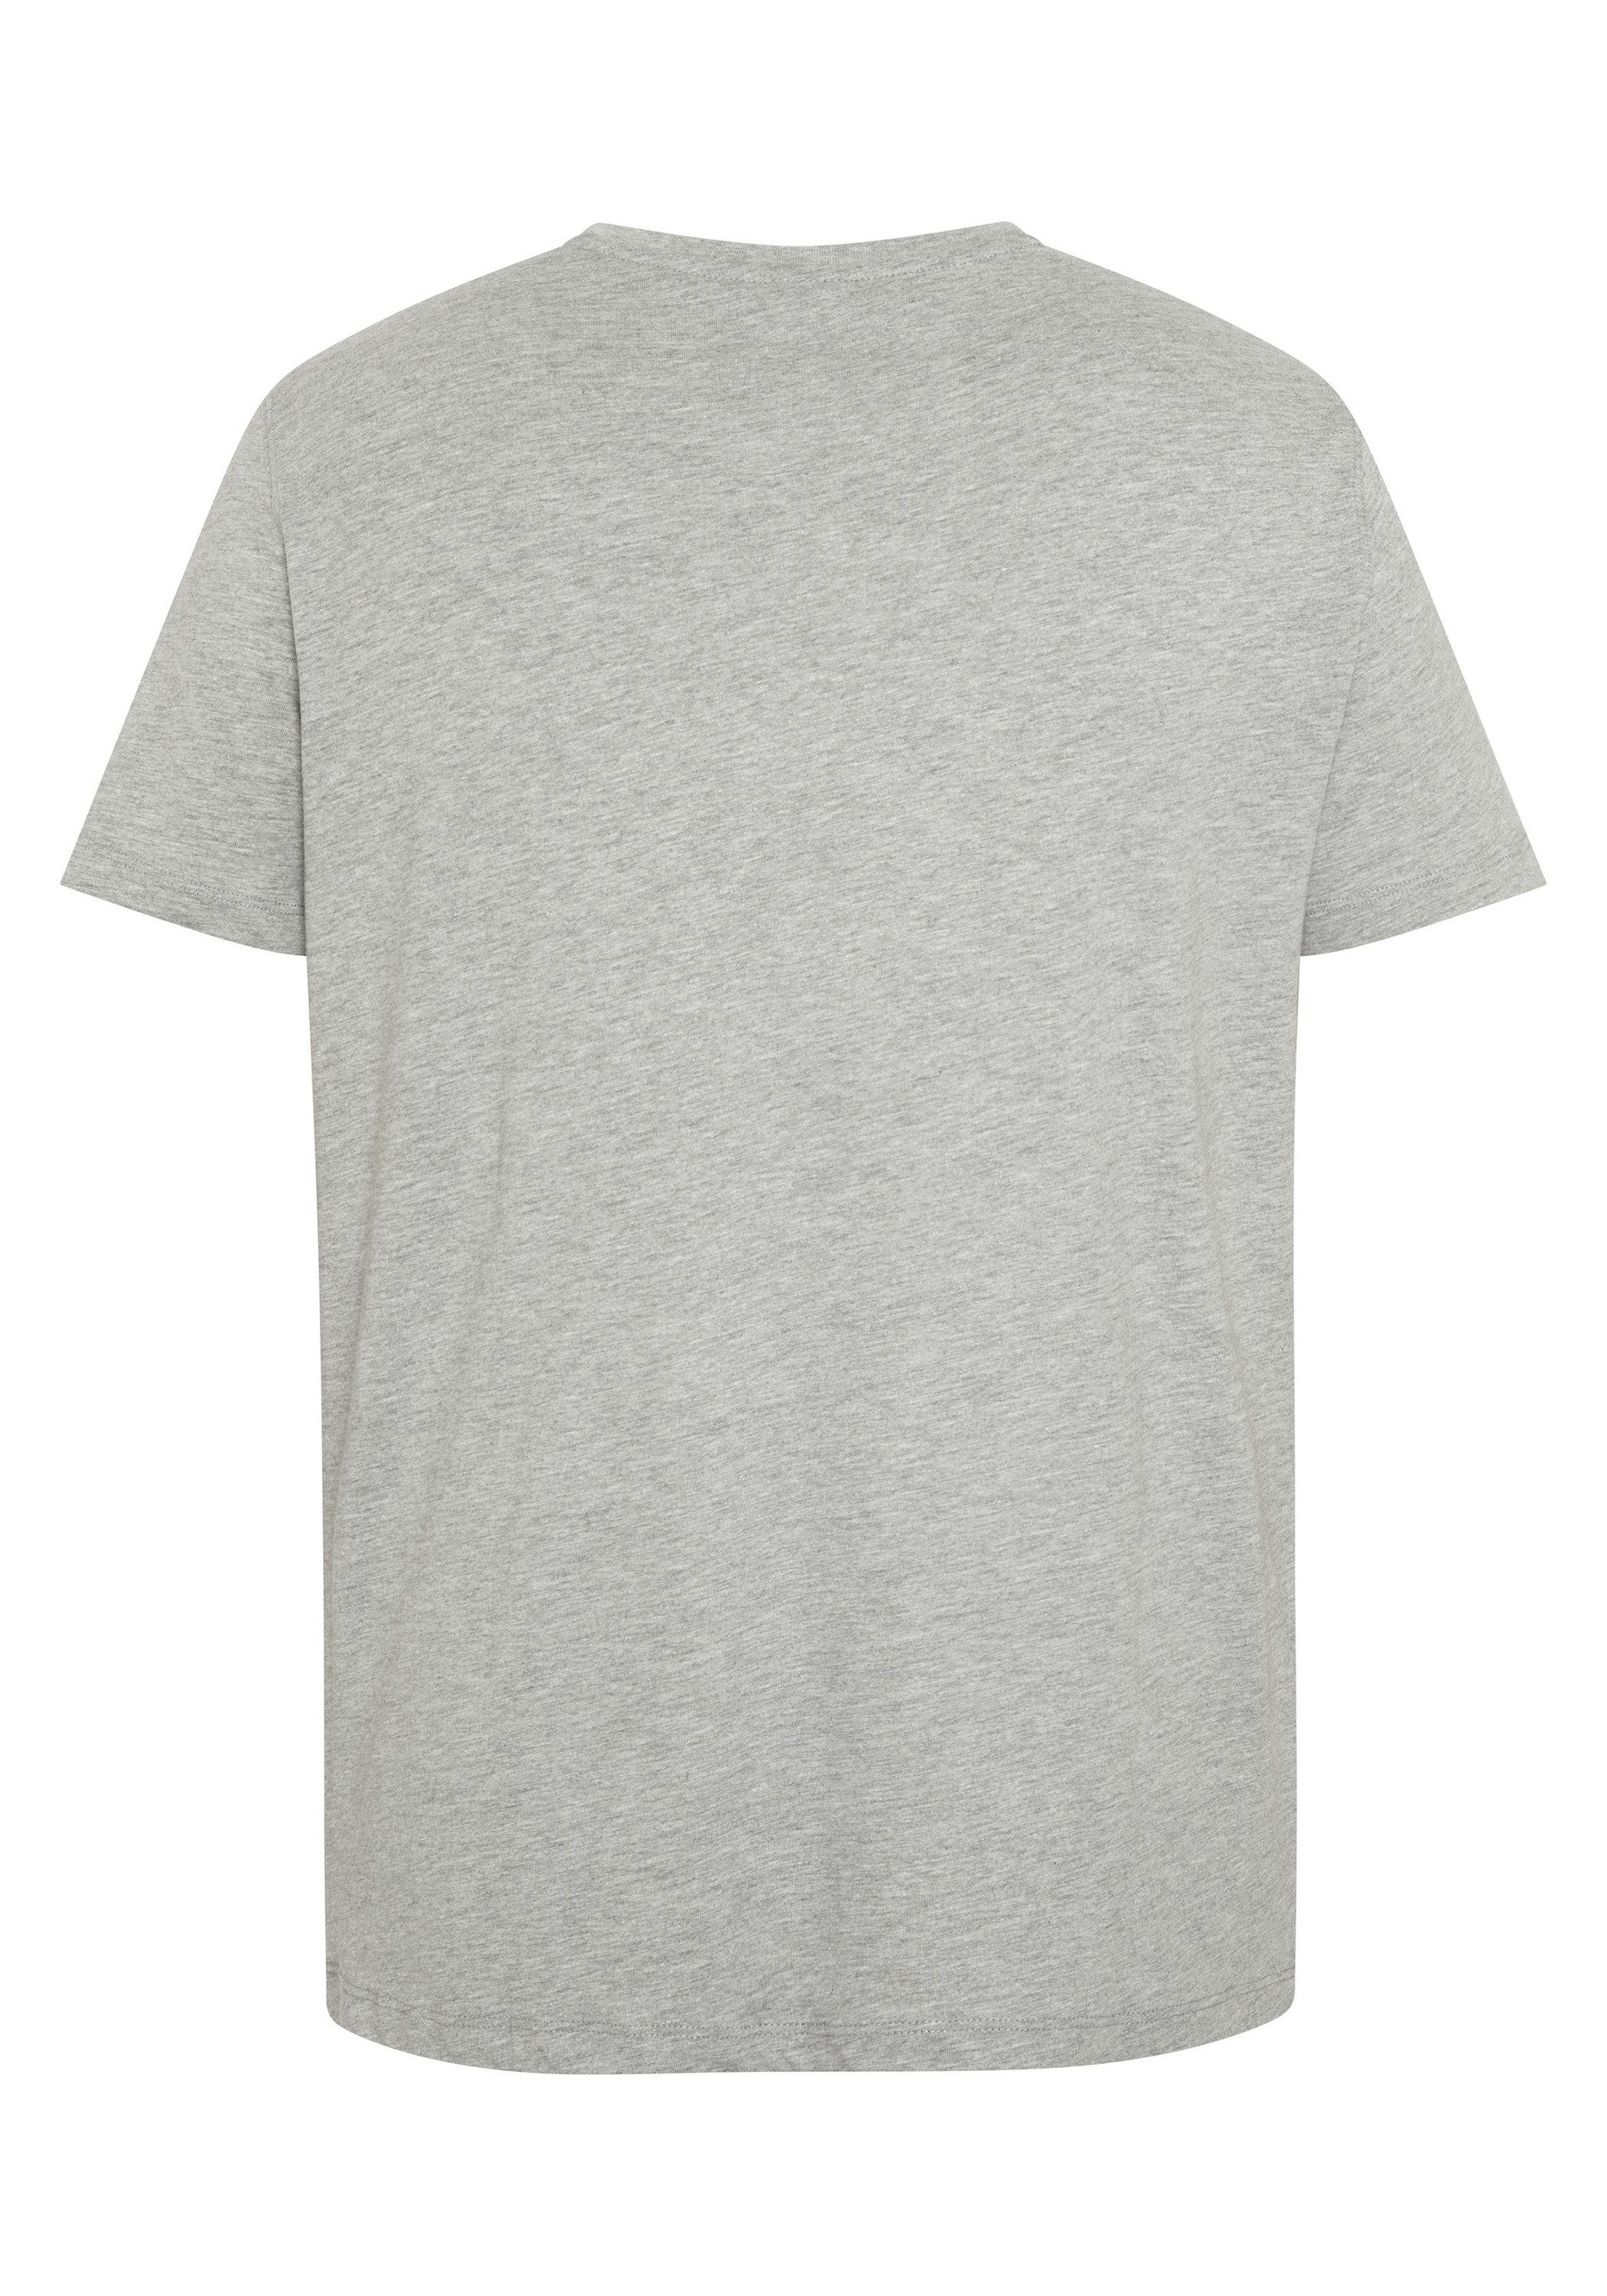 mit Polo 17-4402M Melange Print-Shirt Logo-Schriftzug Sylt Gray Neutral